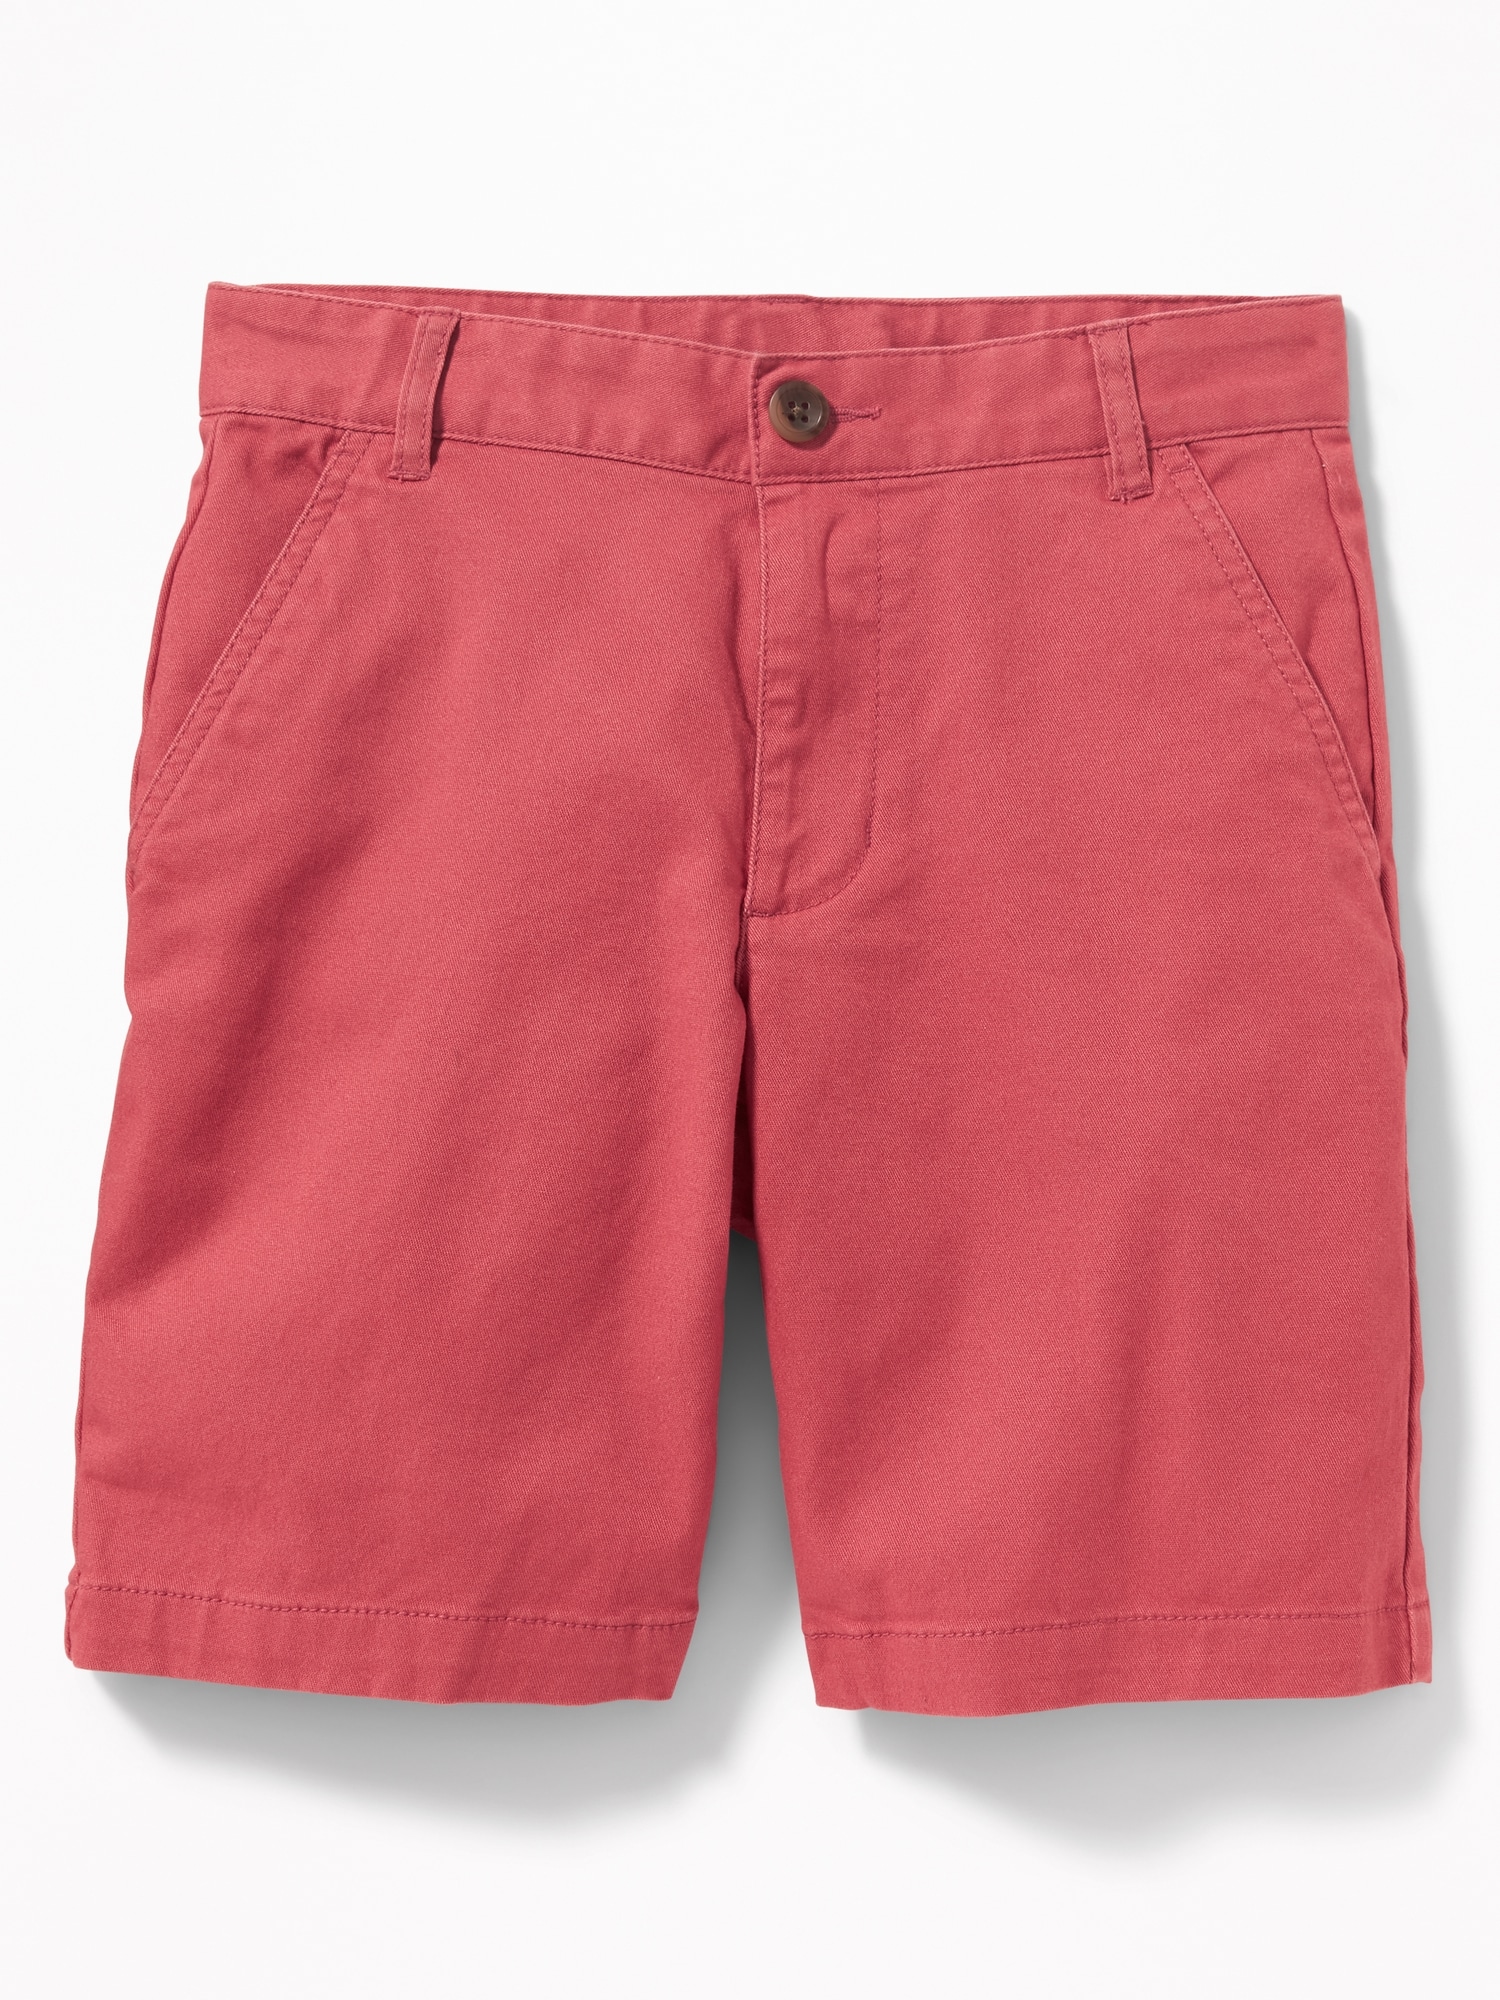 Straight Built-In Flex Twill Shorts for Boys